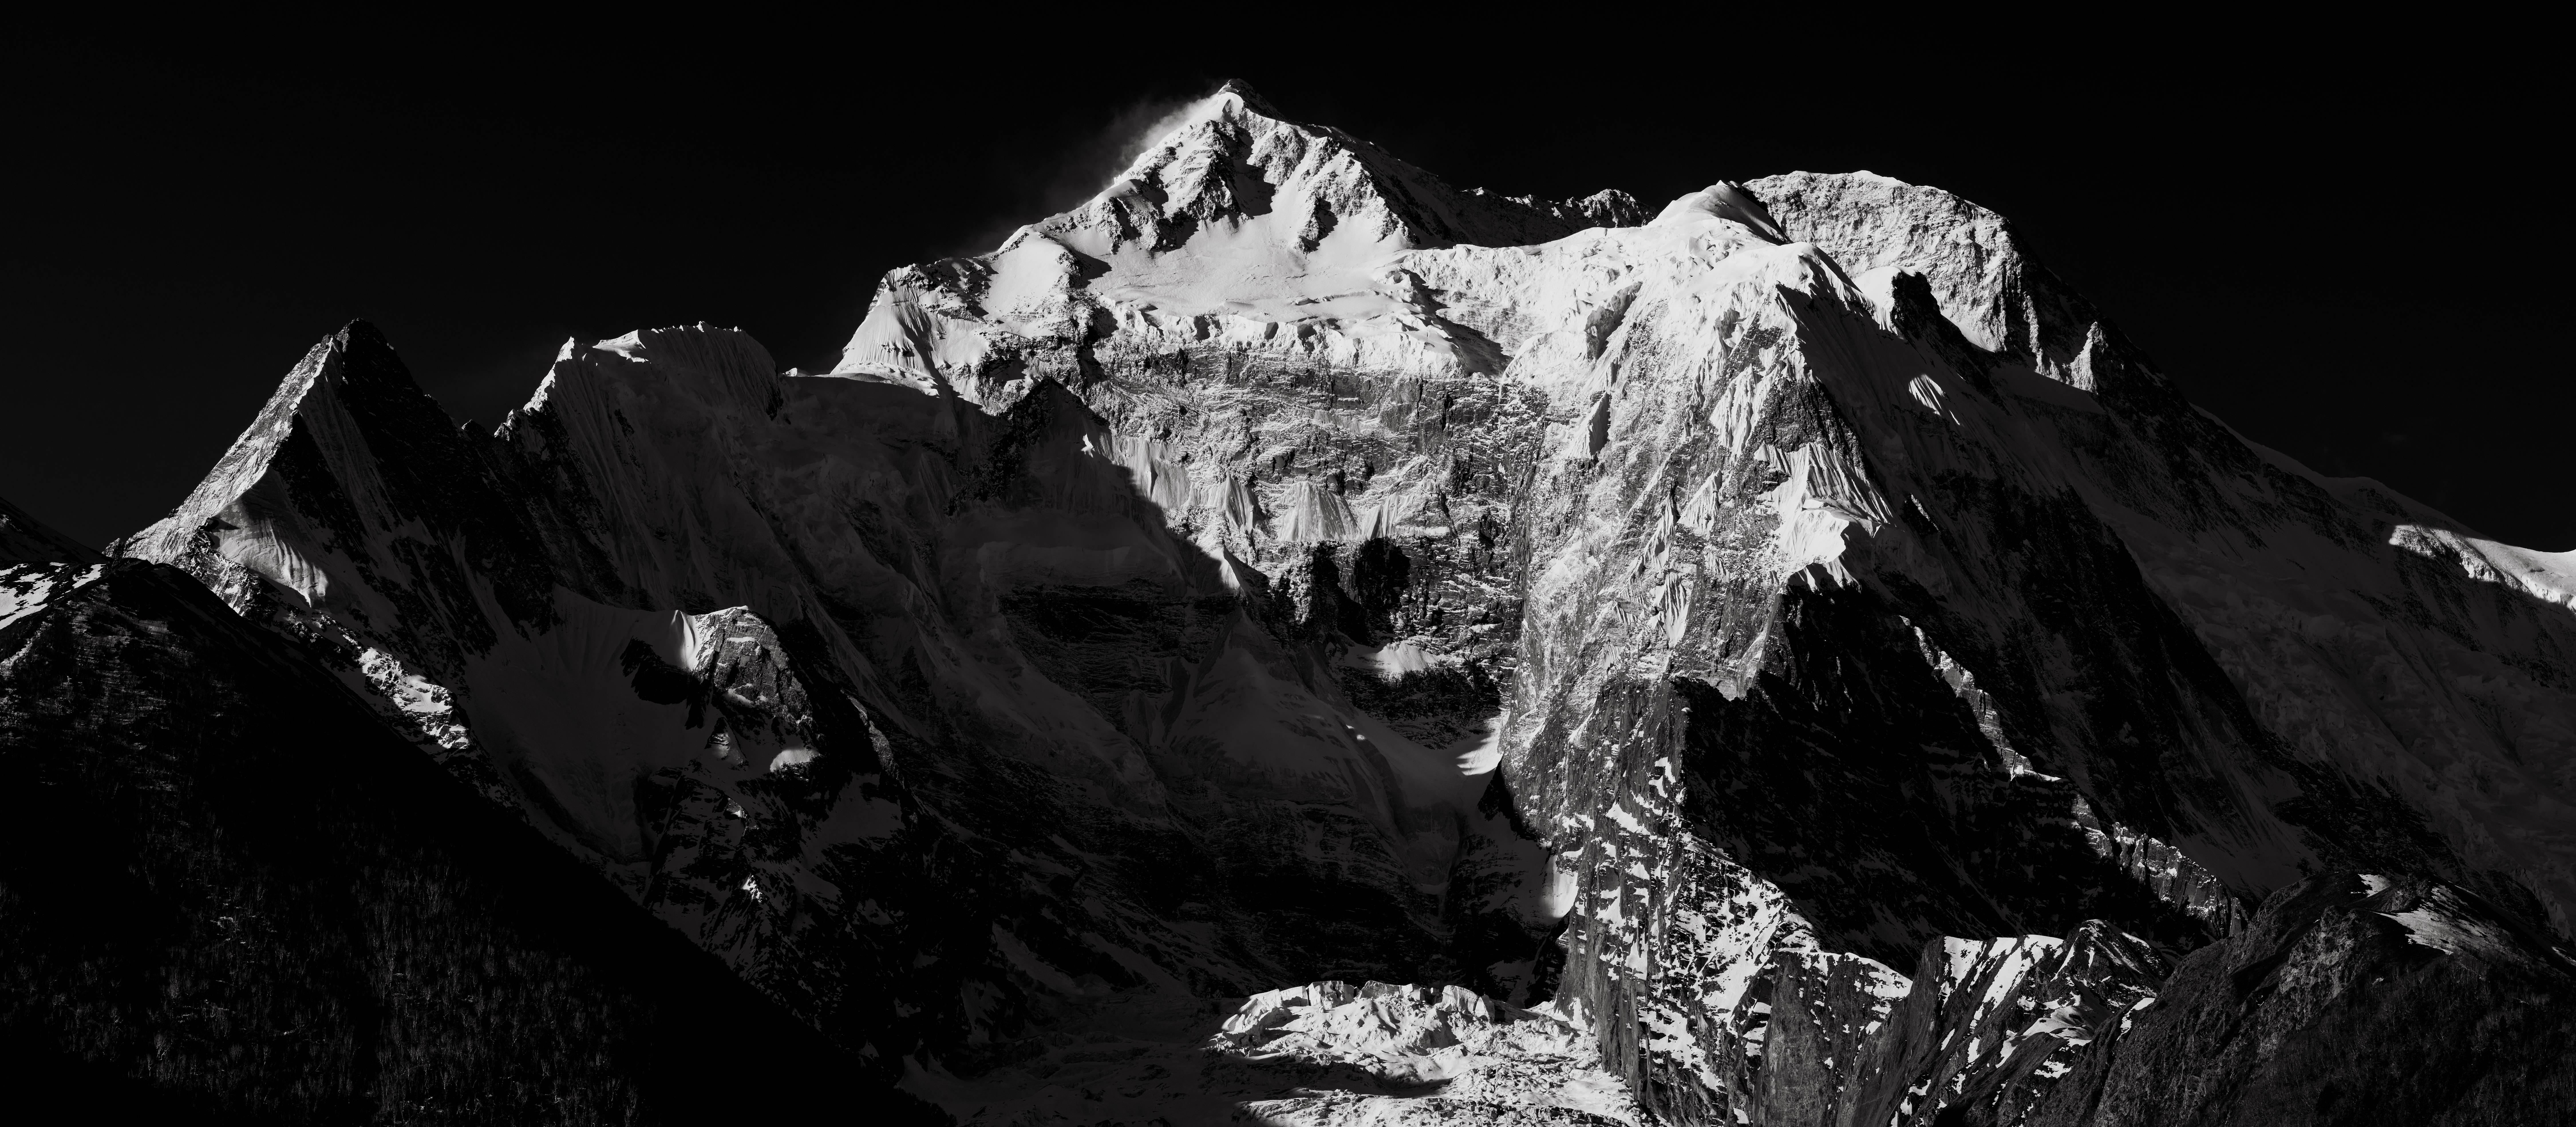 Dylan O'Connor Landscape Photograph - Annapurna III (24, 787 ft)